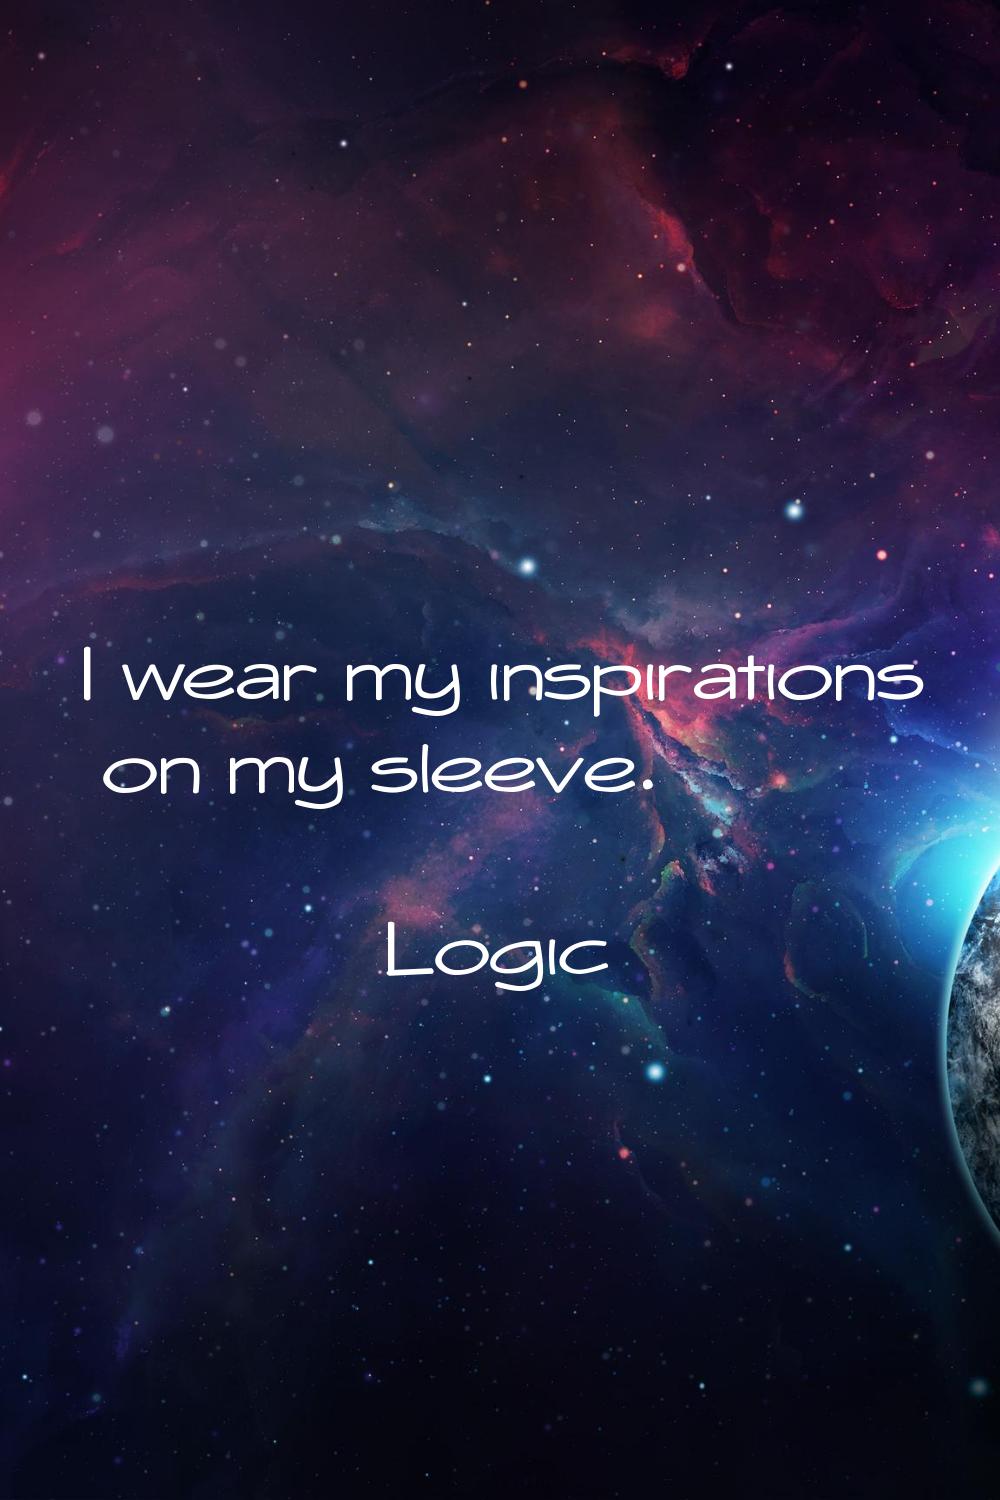 I wear my inspirations on my sleeve.